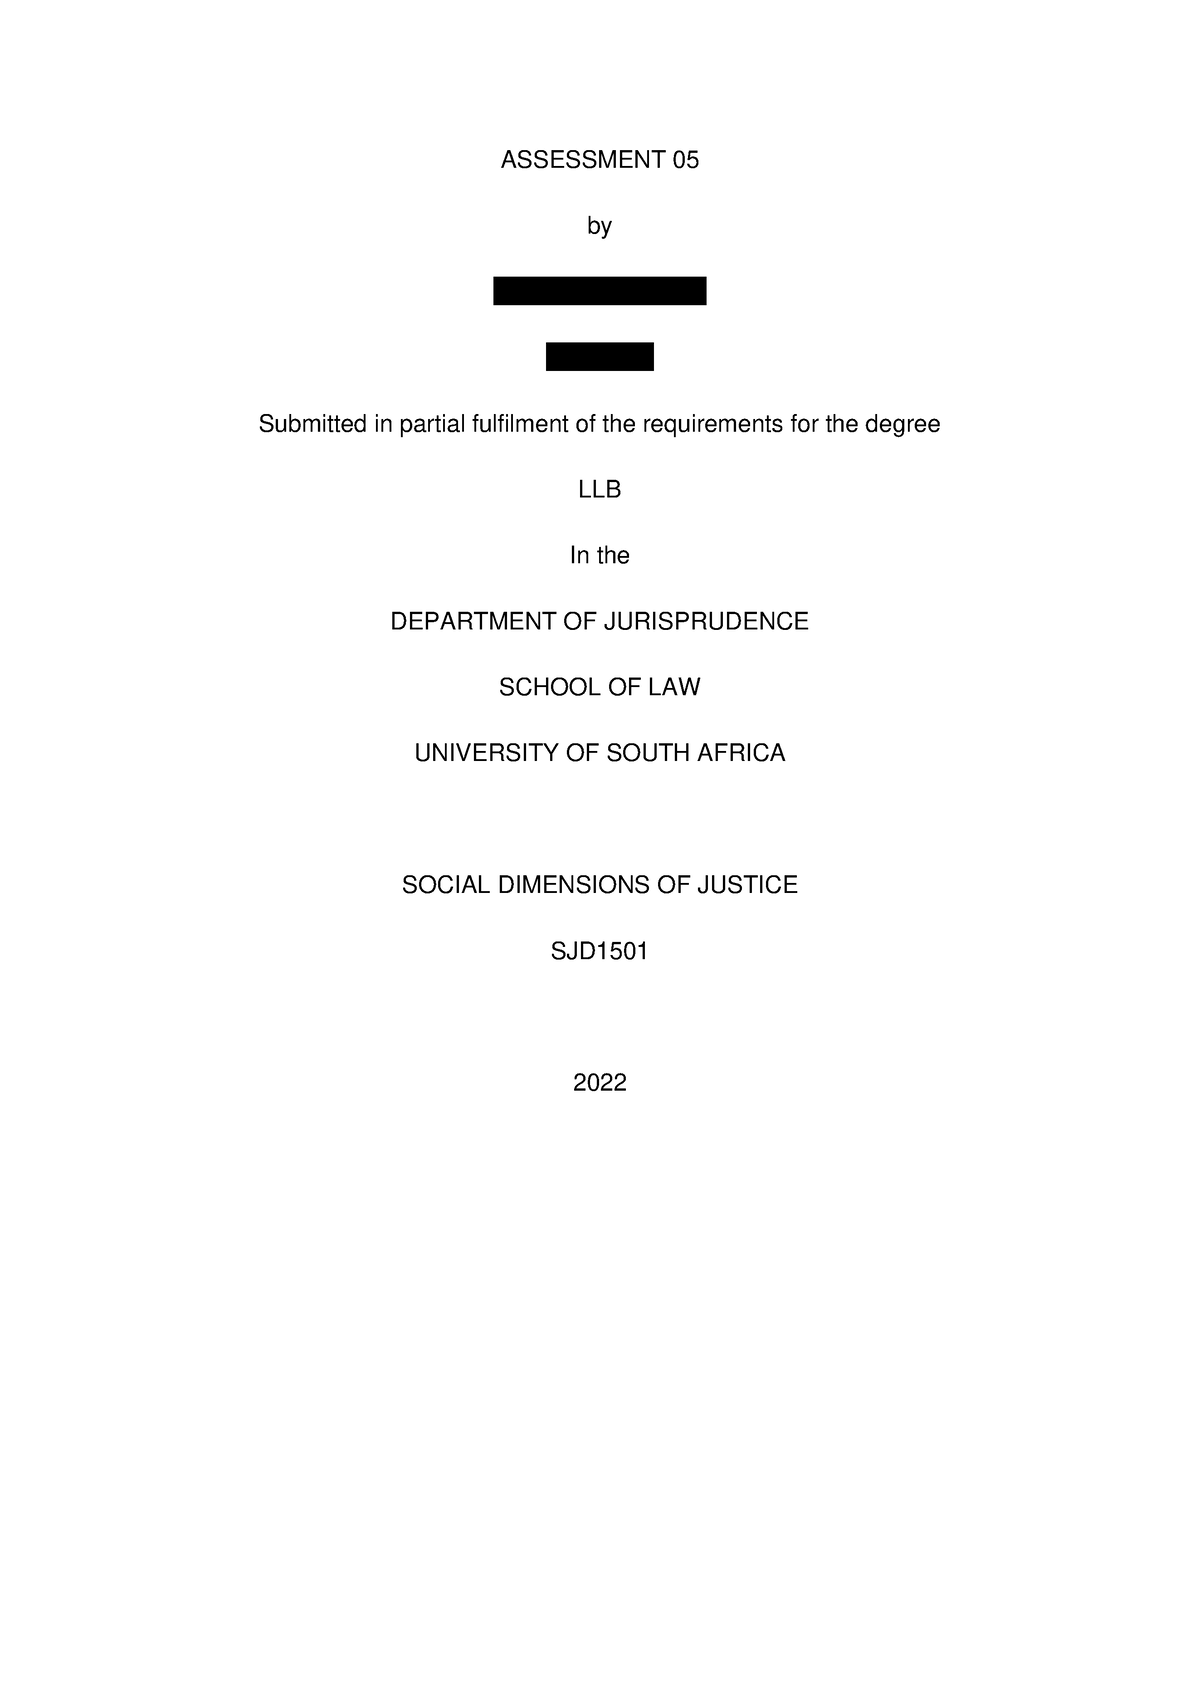 Assessment 5 SJD1501 - Social Dimensions of Justice Semester 1 ...